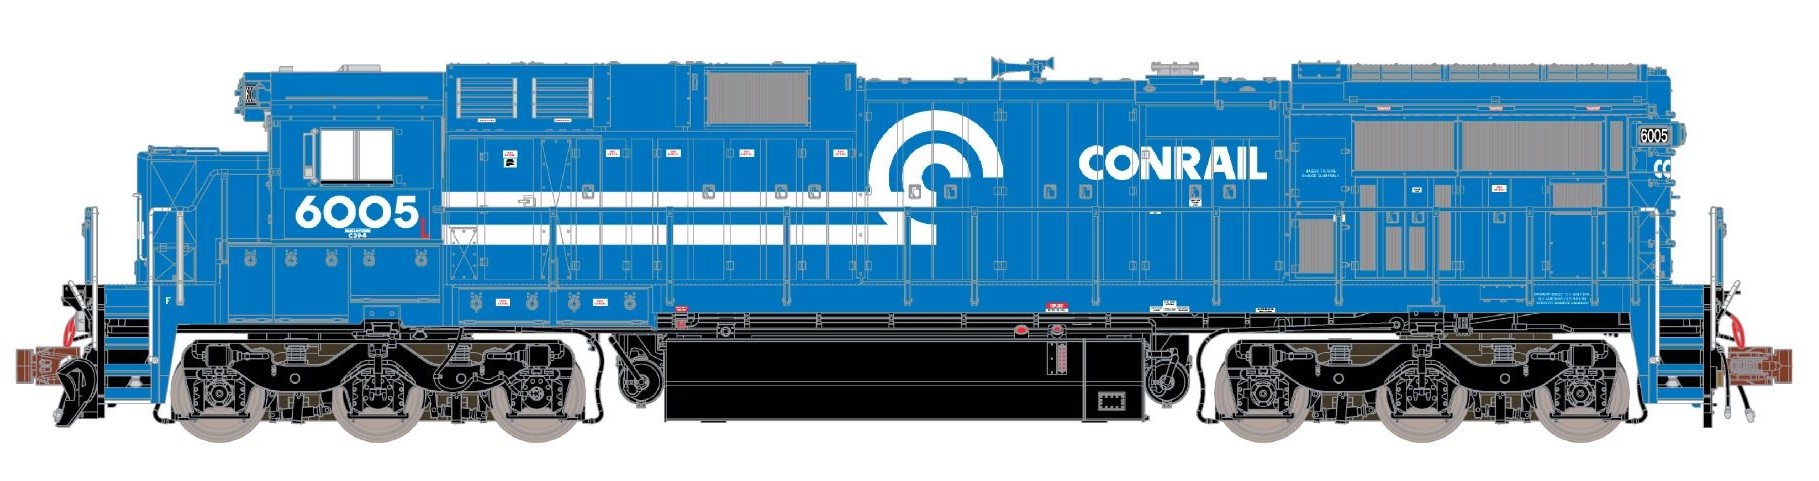 ScaleTrains Rivet Counter N SXT39182 DCC Ready GE C39-8 Locomotive Phase III Conrail w/Ditch Lights CR #6003